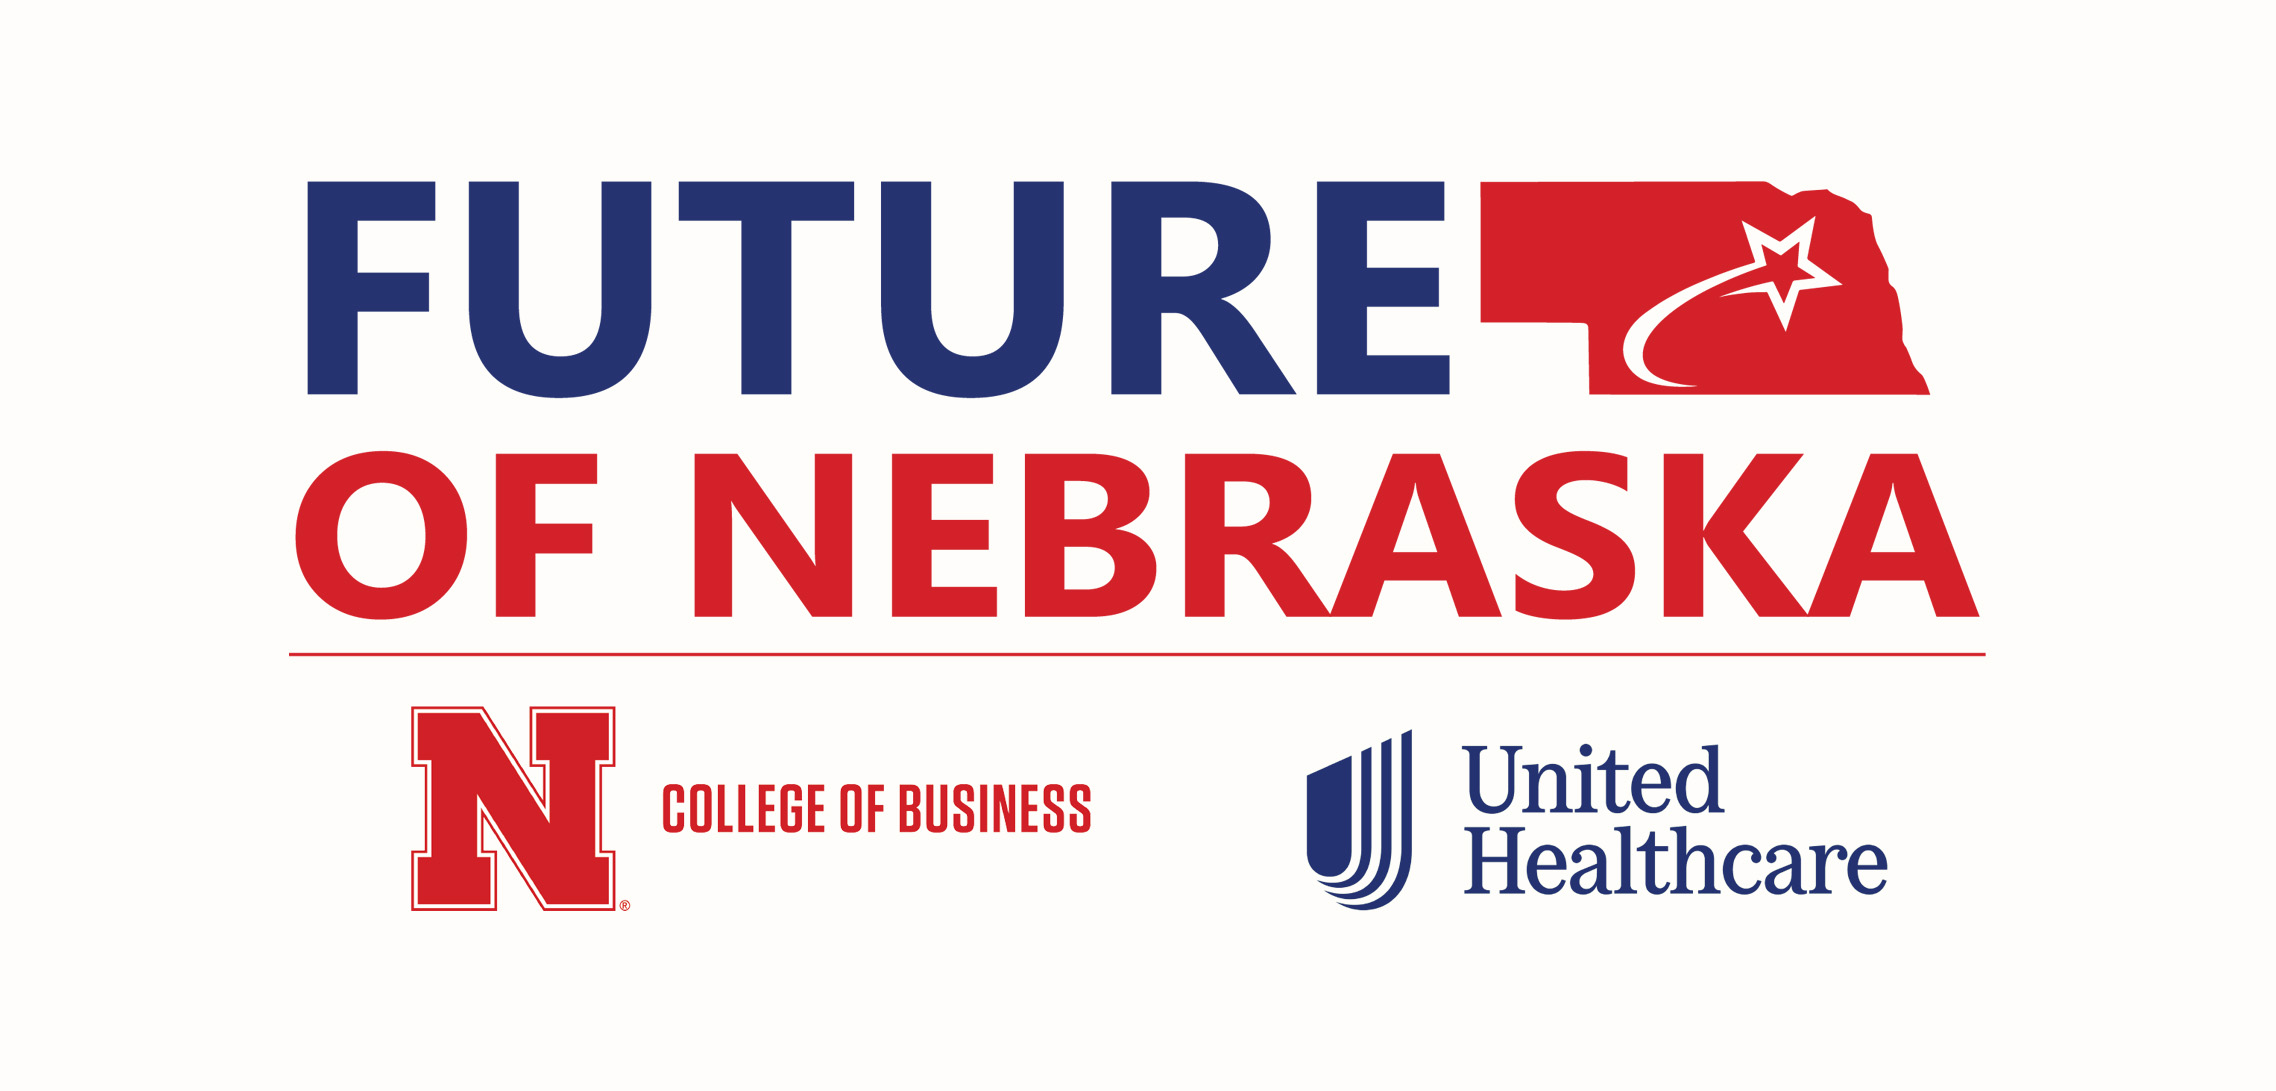 Future of Nebraska - college of business & united healthcare